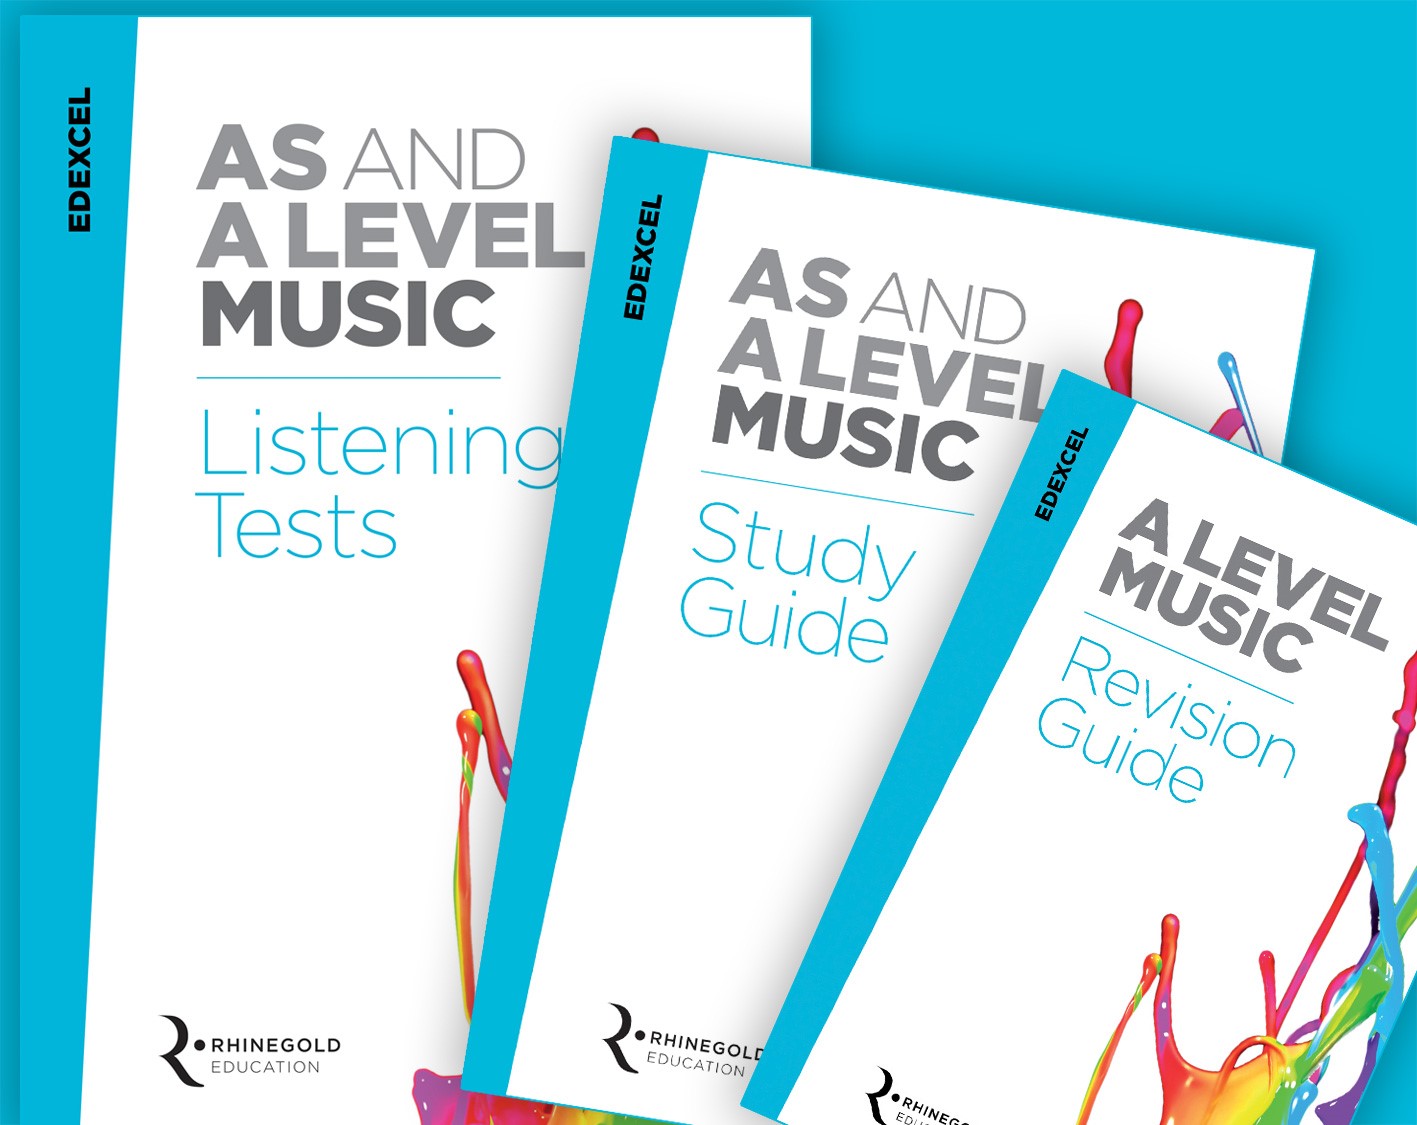 Rhinegold Education: Edexcel A Level Music Exam Pack